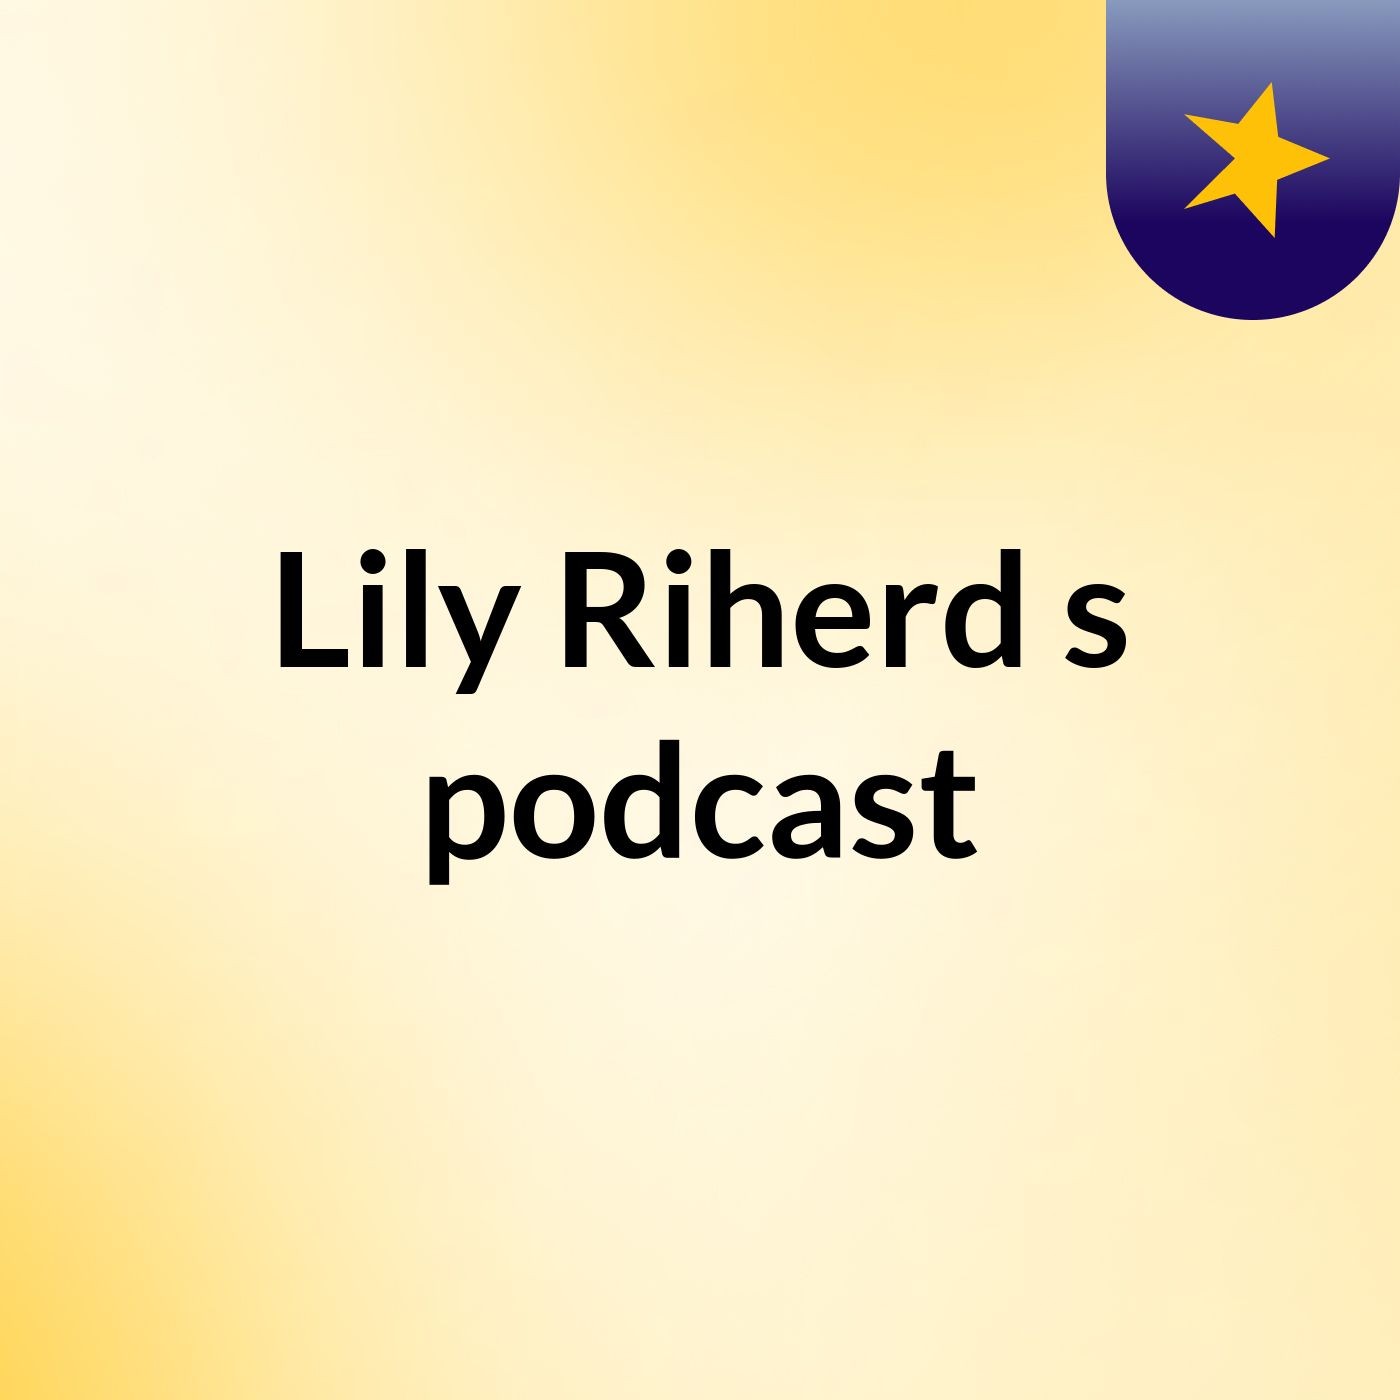 Lily Riherd's podcast